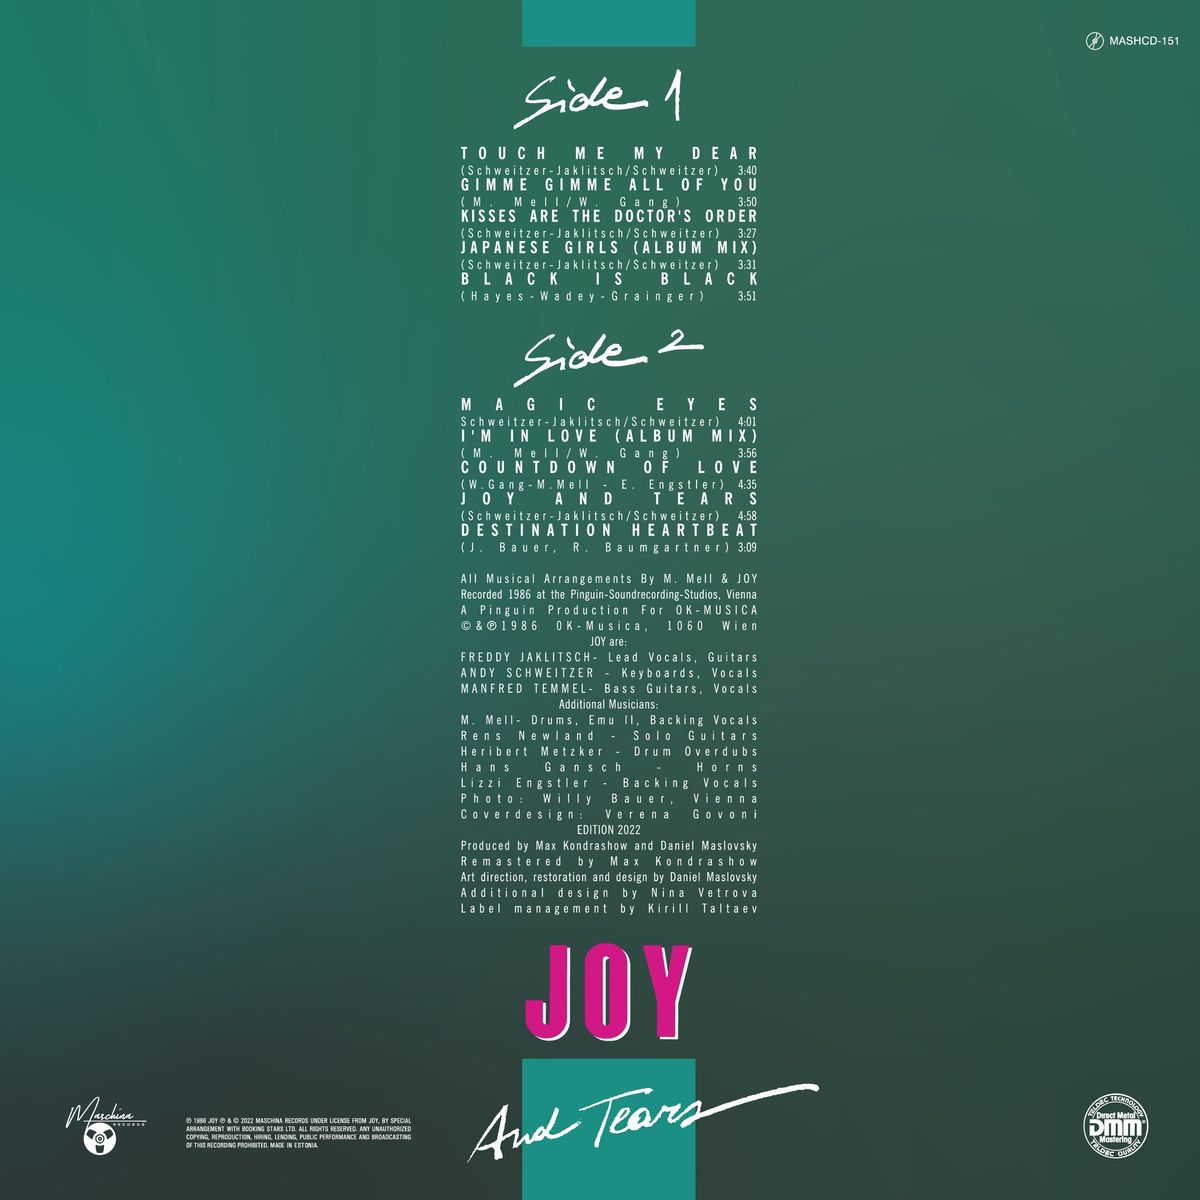 Вінілова платівка Joy — «Joy And Tears» (1987/2022) [Collector's Edition Blue Vinyll]